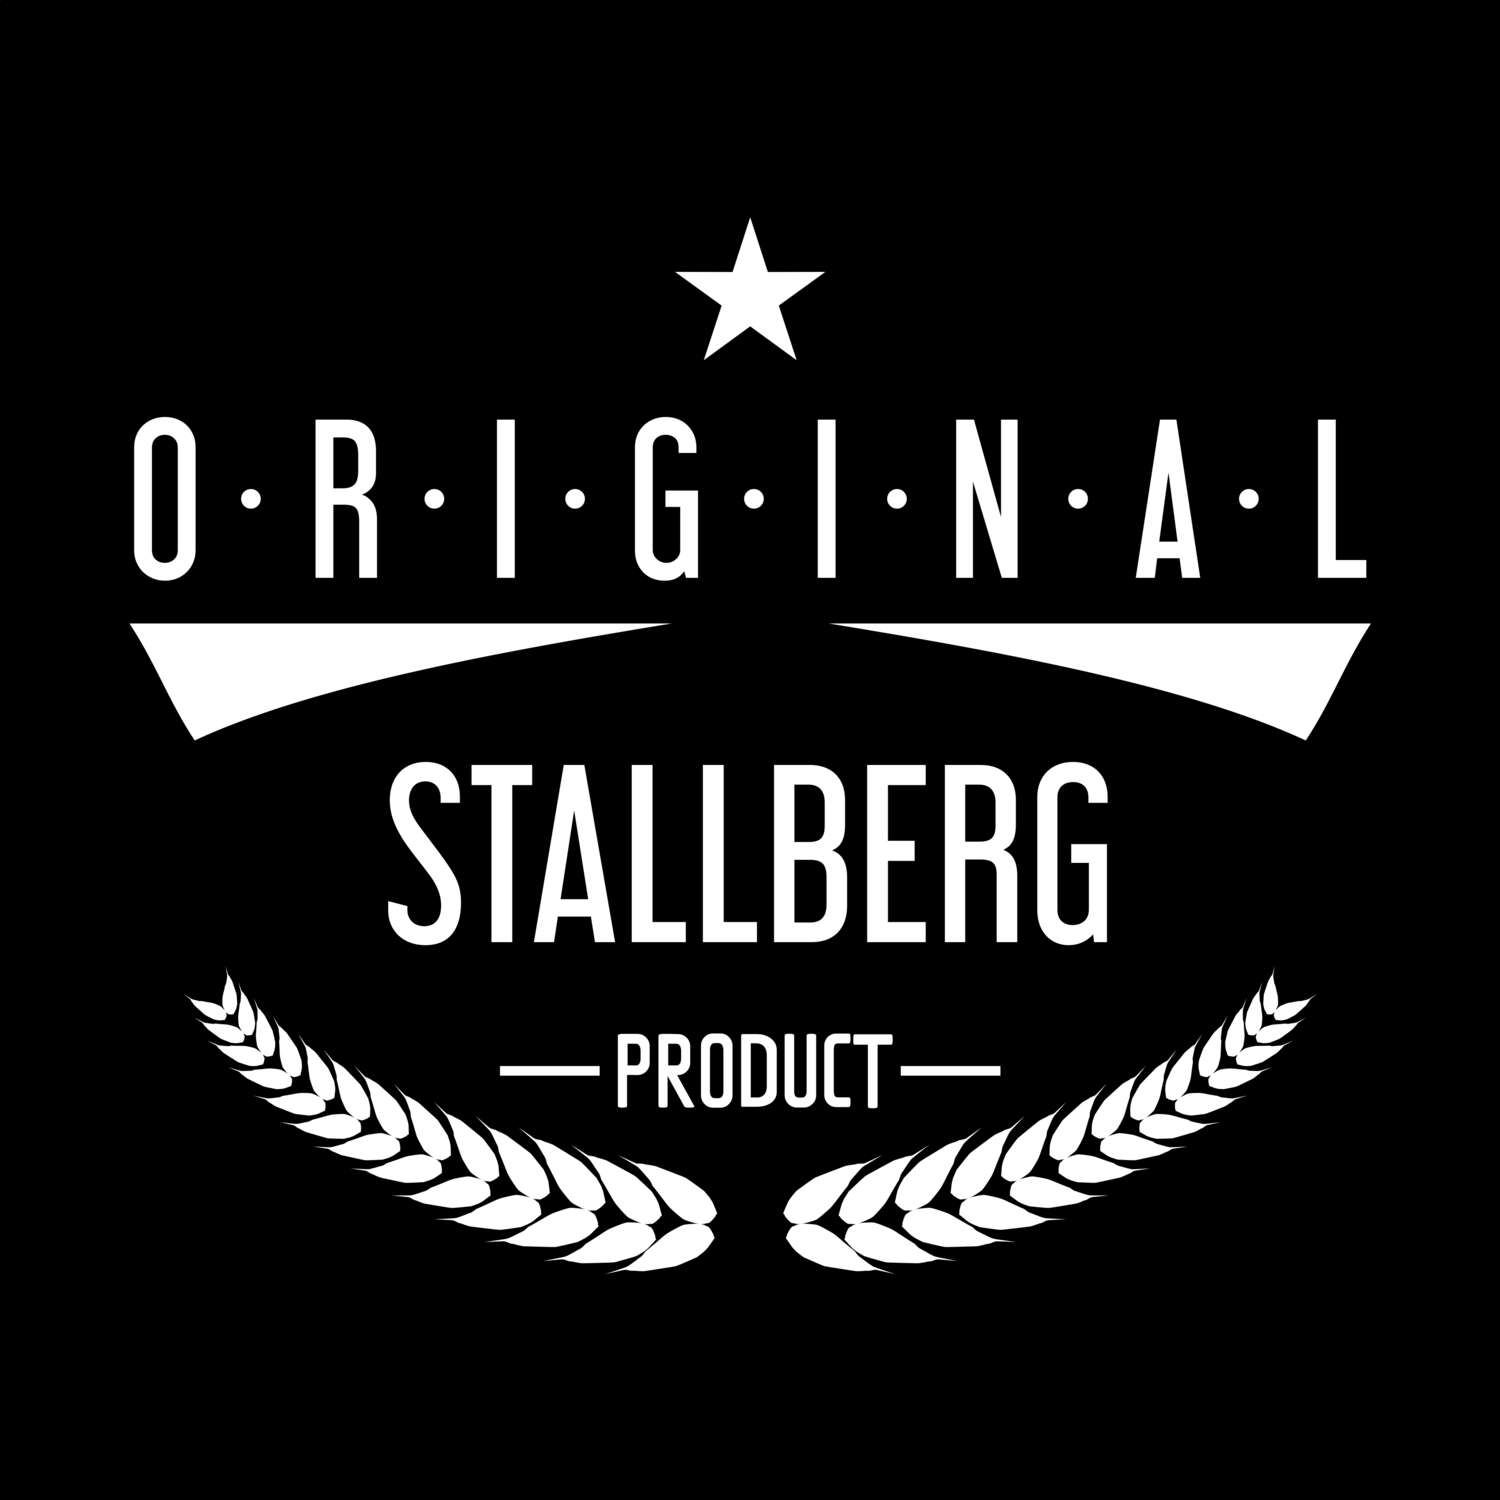 Stallberg T-Shirt »Original Product«